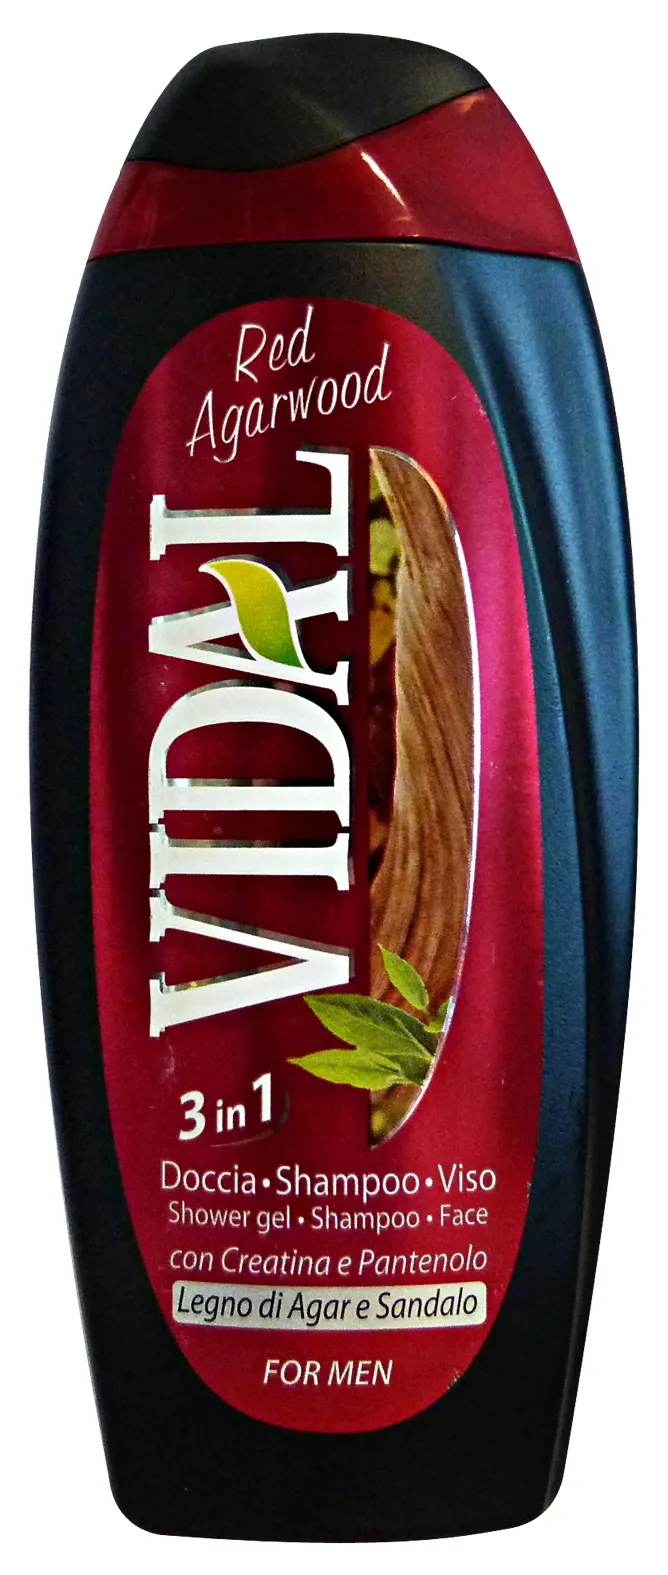 "VIDAL Doc/Shampoo legno agar/sandalo 250 ml. - Doccia schiuma"